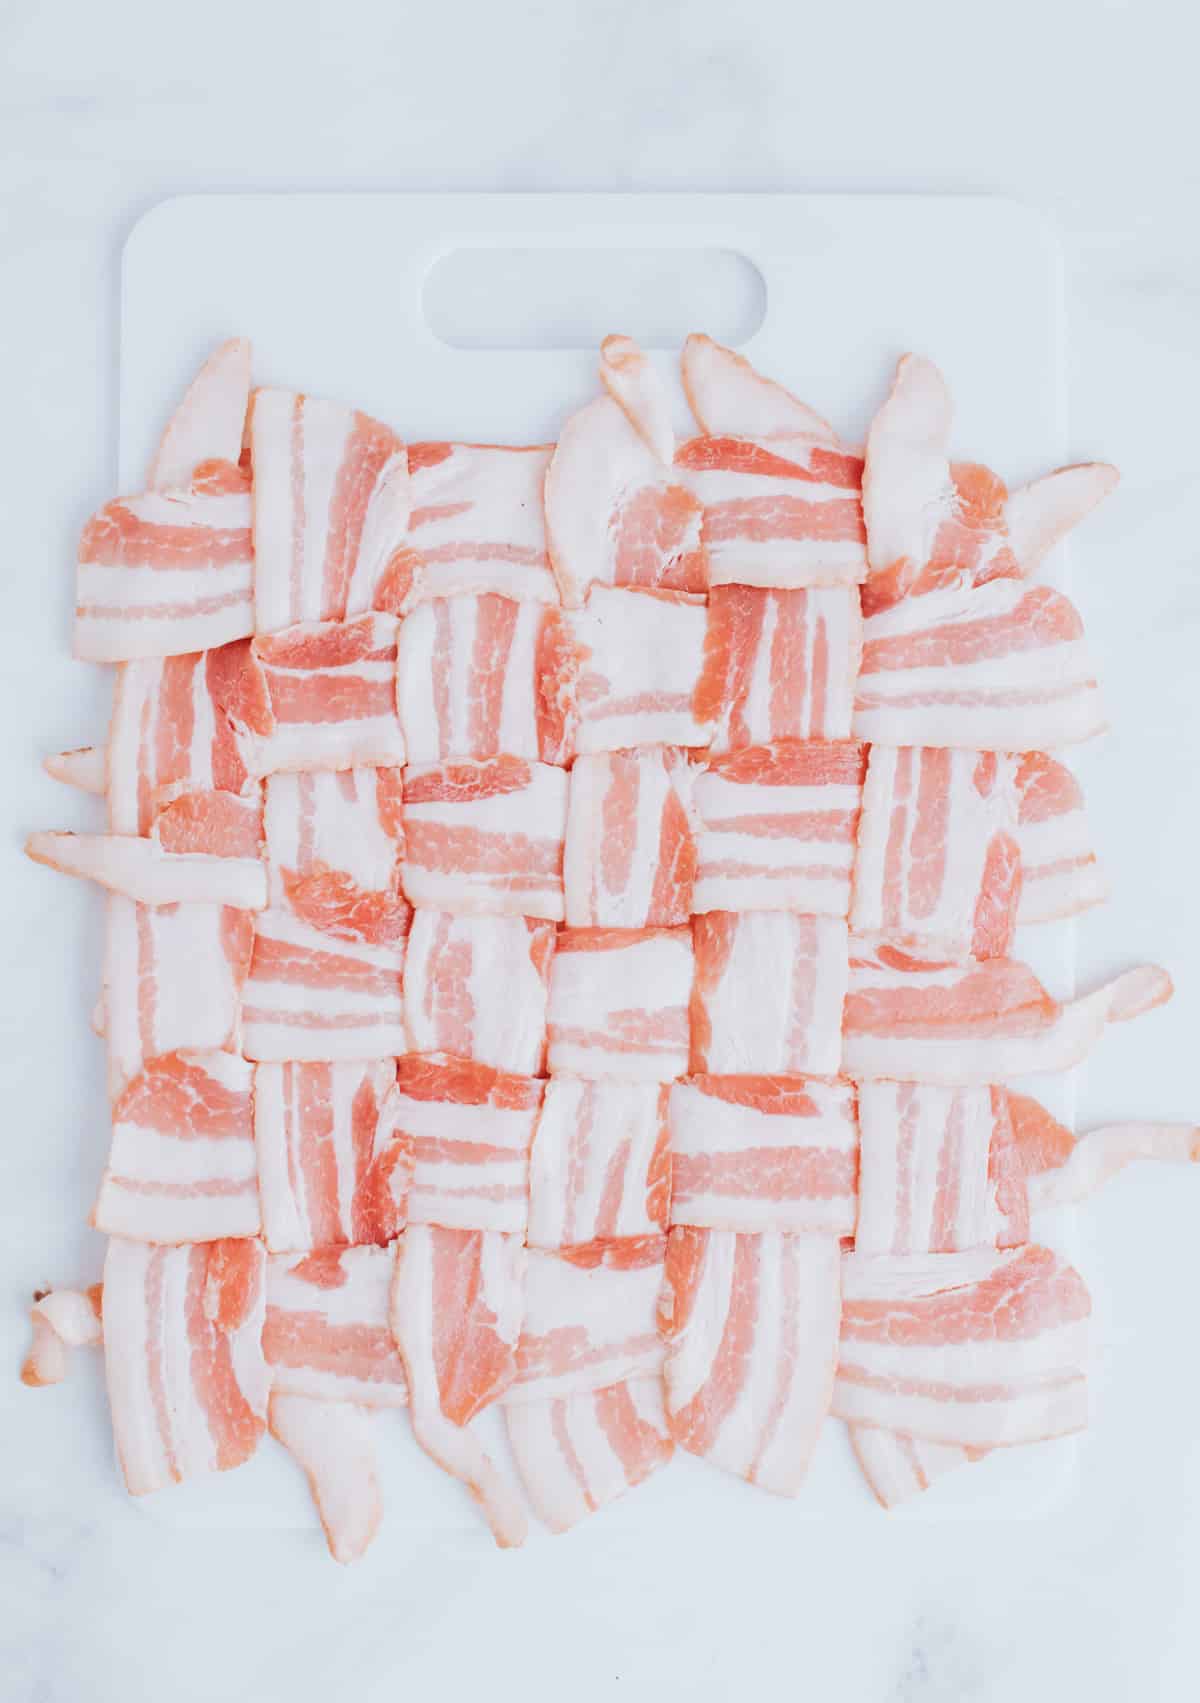 folding strips of bacon on a cutting board